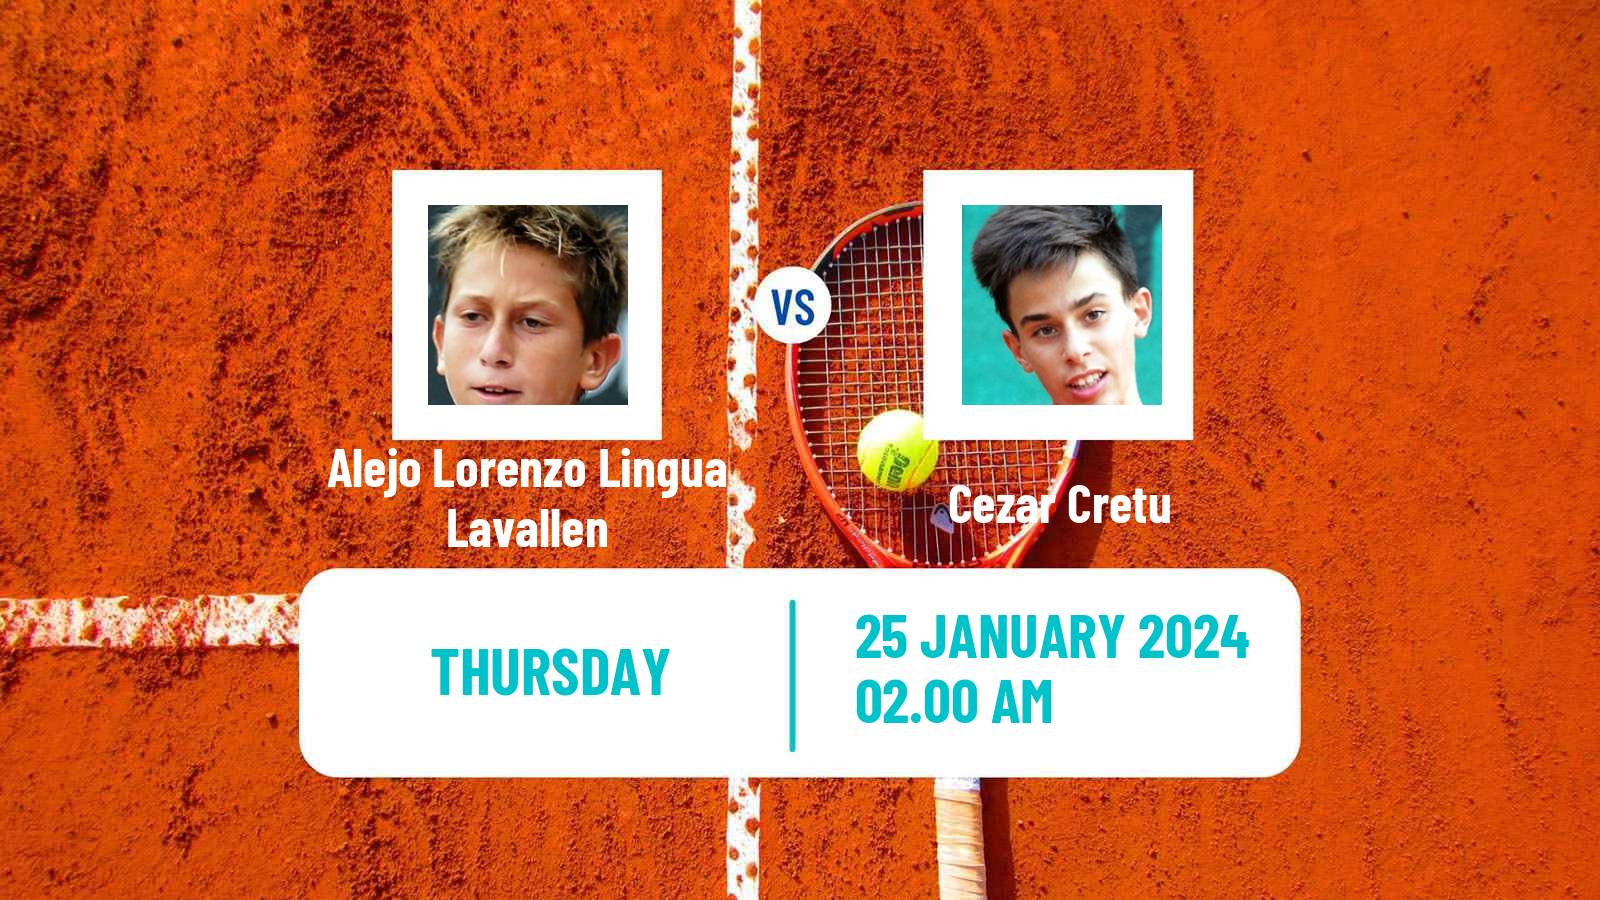 Tennis ITF M15 Antalya 3 Men Alejo Lorenzo Lingua Lavallen - Cezar Cretu